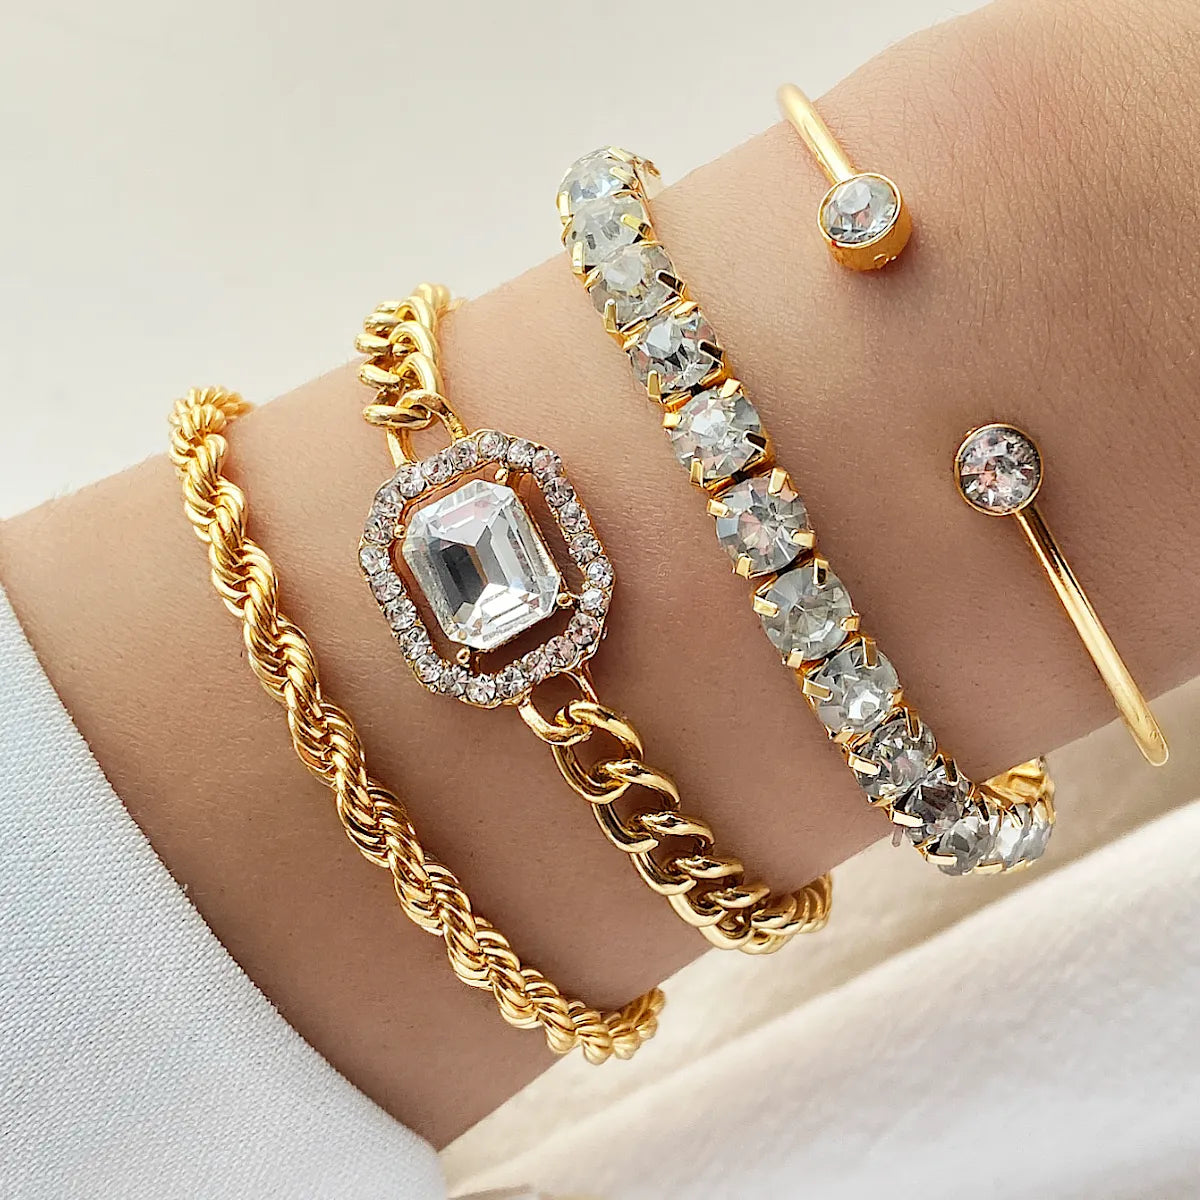 4 Piece Set Luxurious Bracelets for Women Crystal Shiny Adjustable Opening Chain Bracelets Punk Bangle Fashion Jewelry